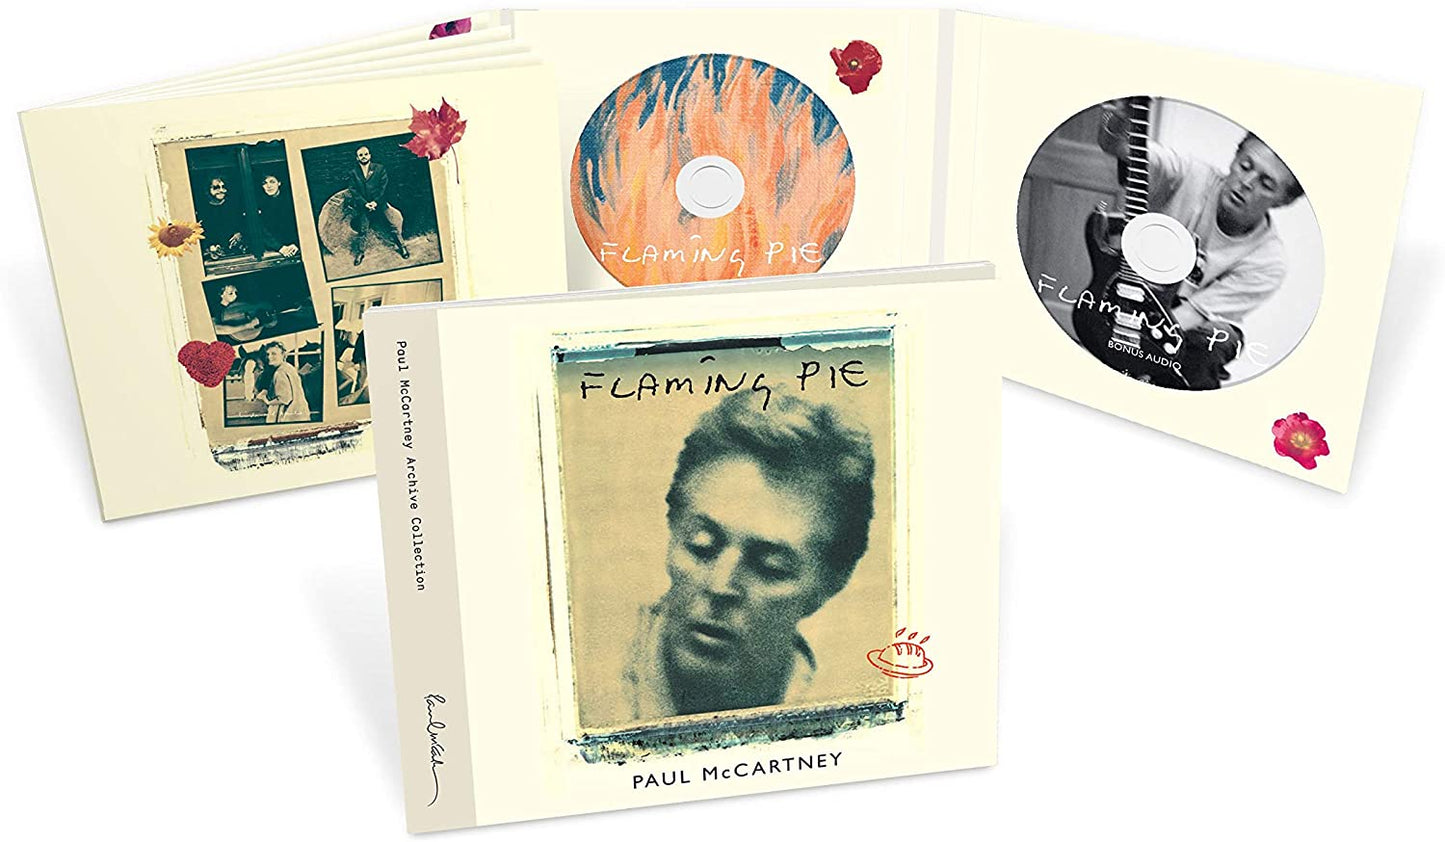 Paul McCartney / Flaming Pie 2CD reissue